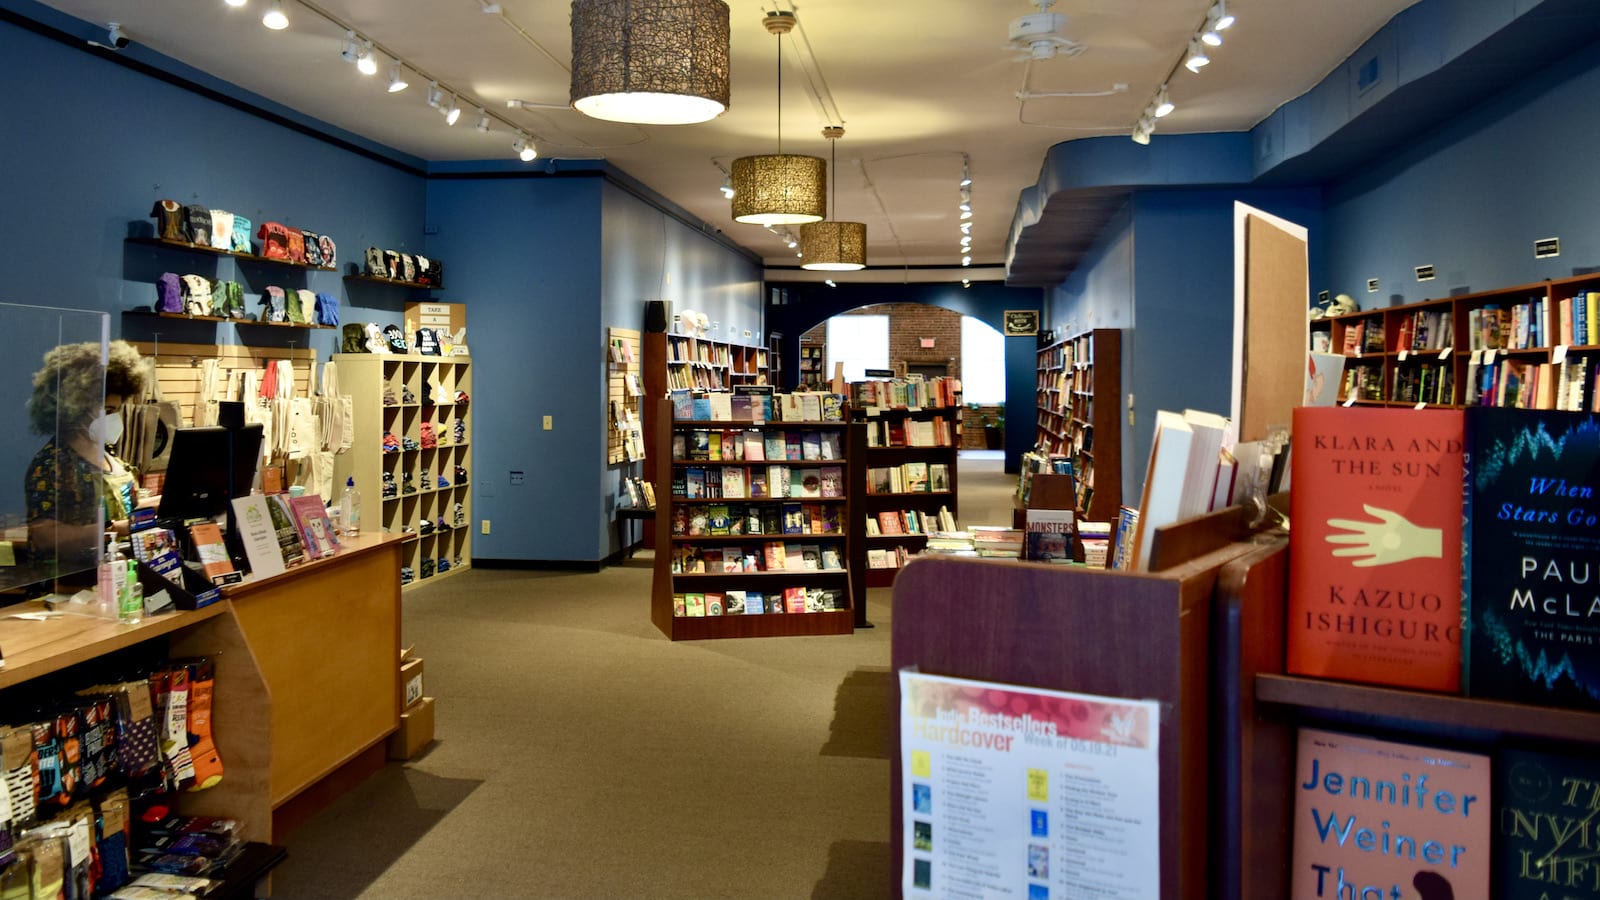 Interior of Subterranean Books on the Delmar Loop in St. Louis, MO